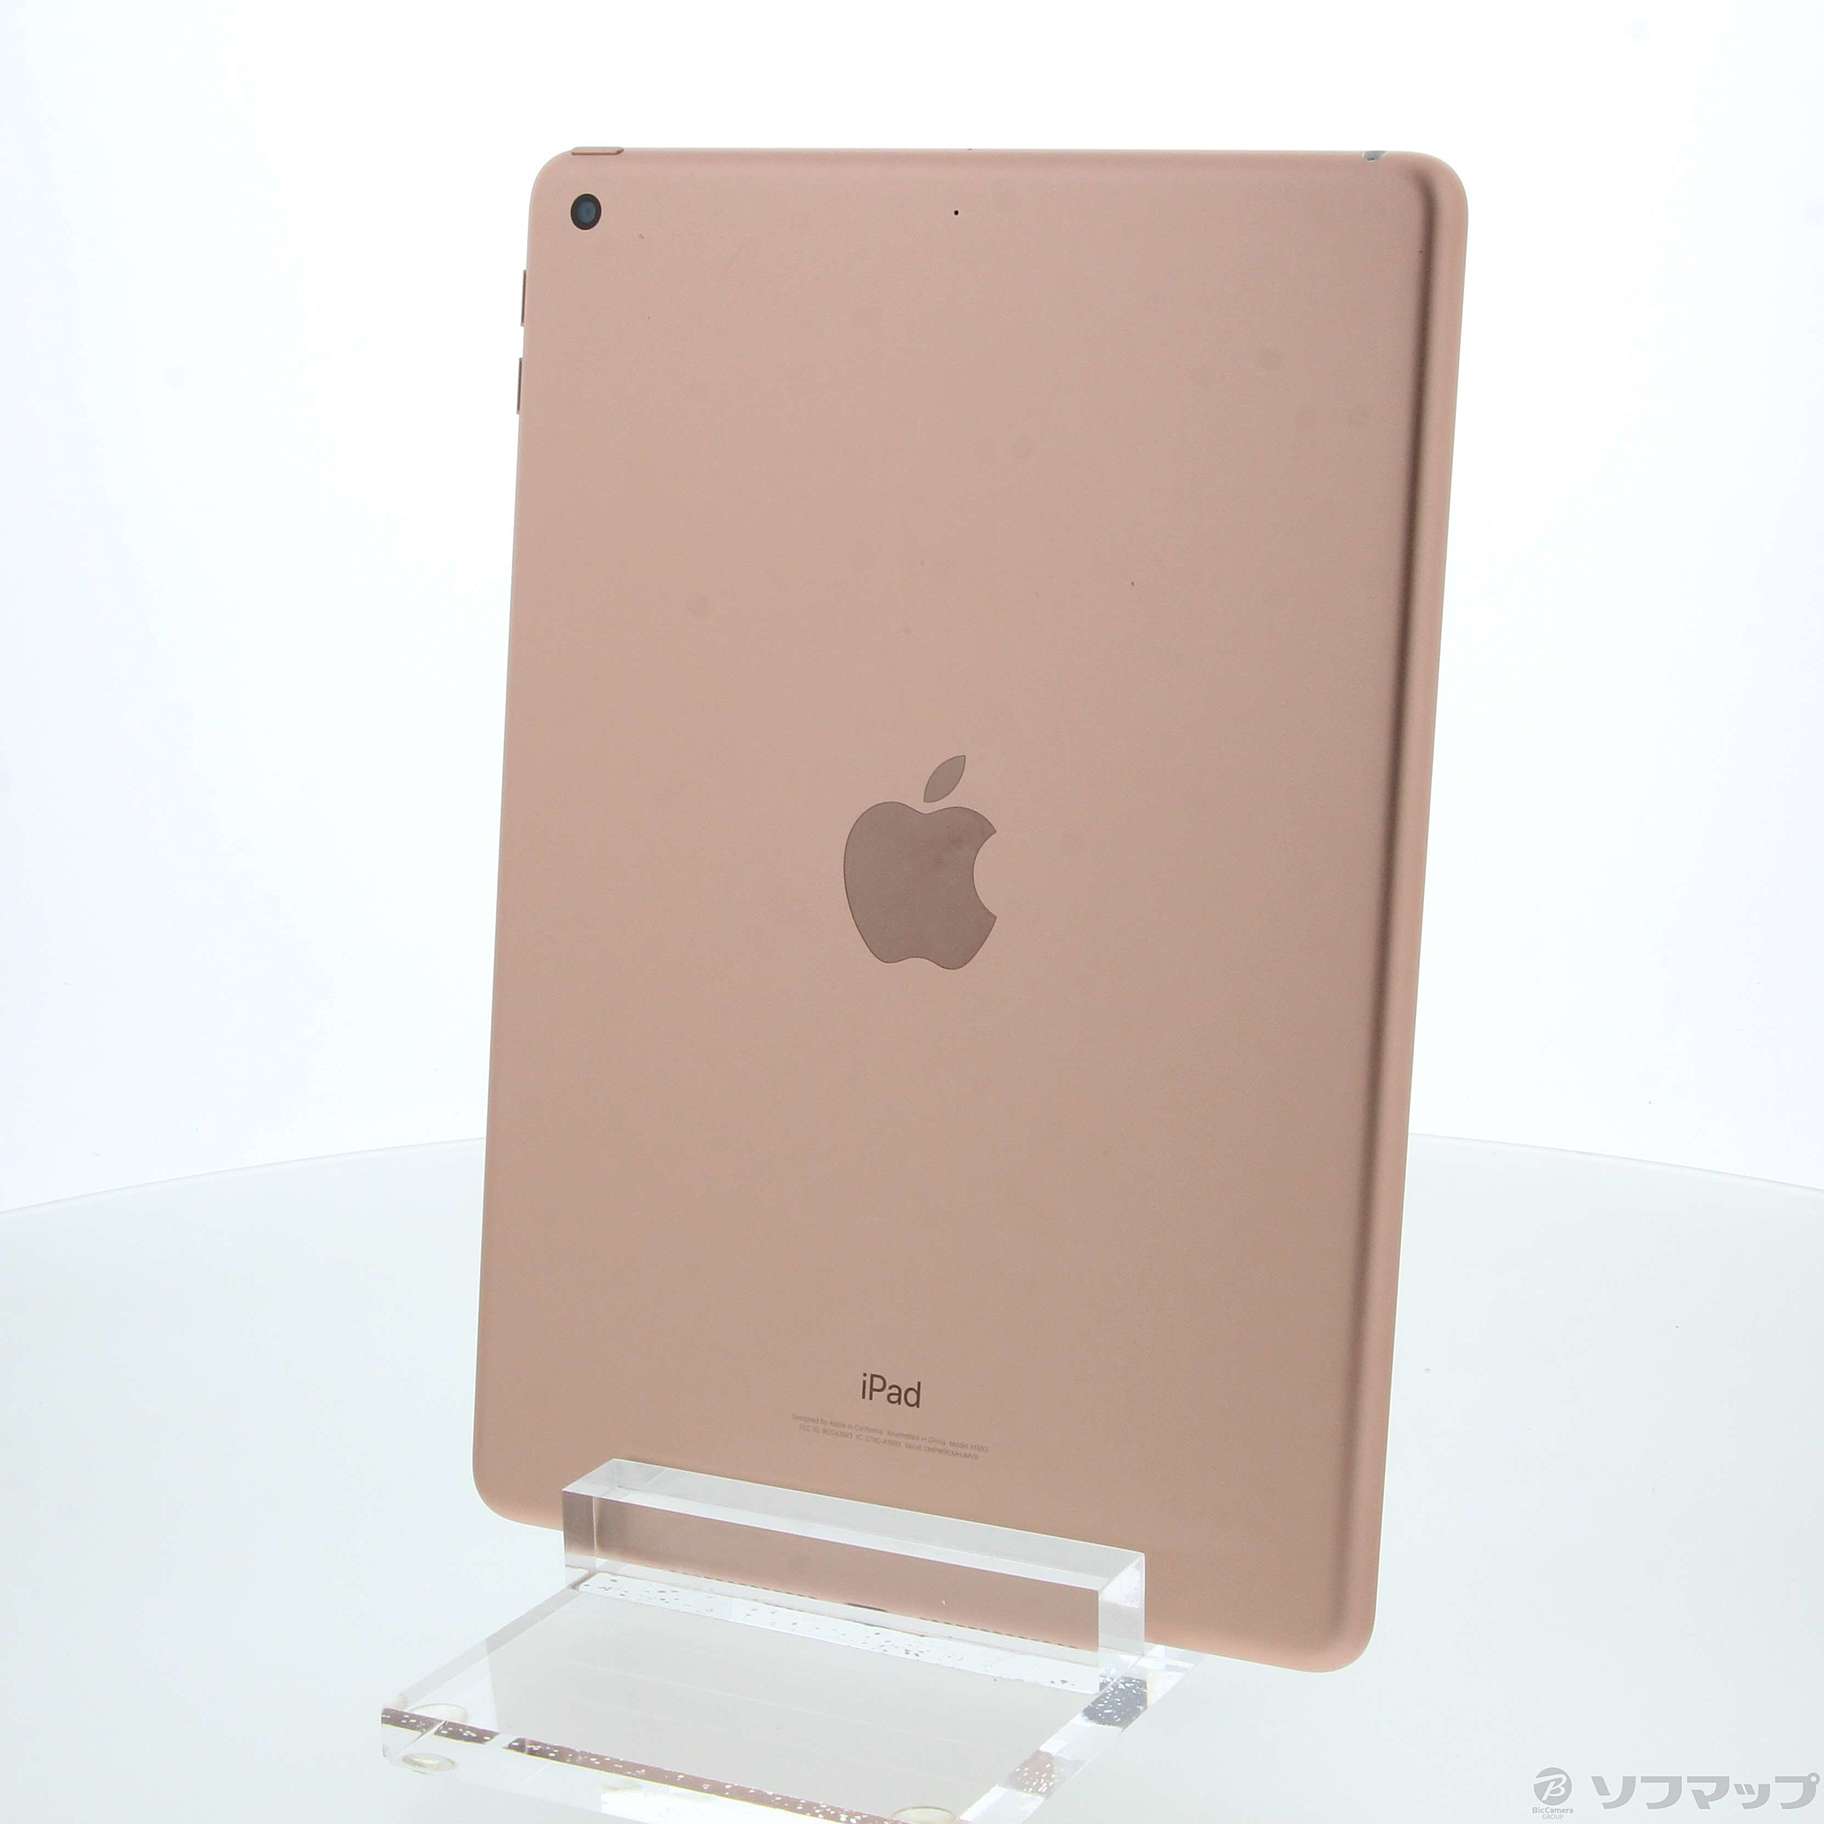 iPad 第6世代 WiFi 32GB ローズゴールド - www.stedile.com.br